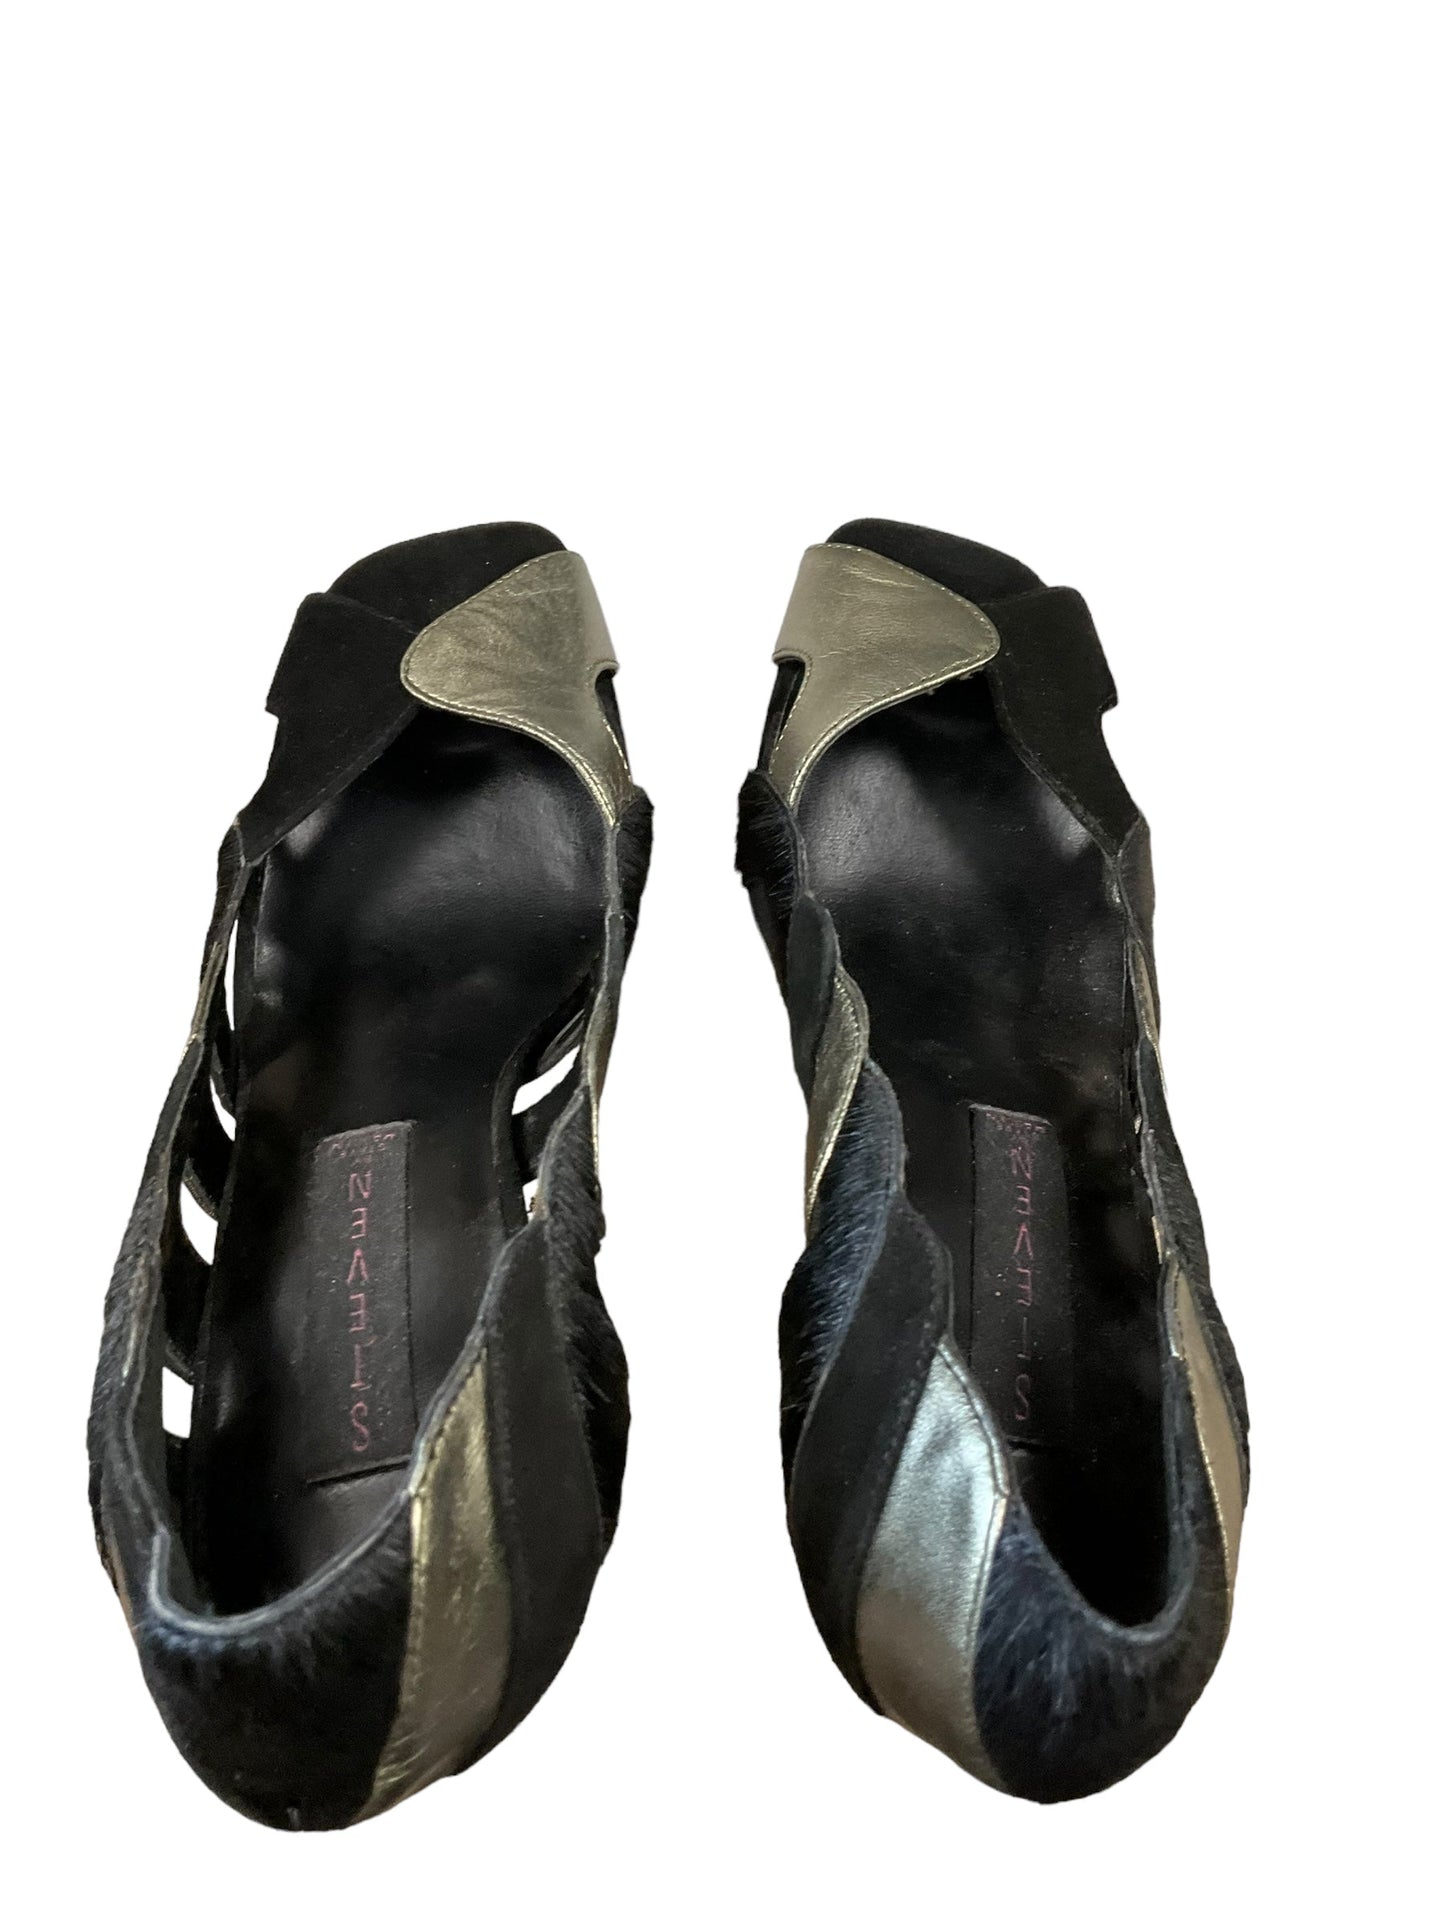 Black Shoes Heels Stiletto Steve Madden, Size 7.5